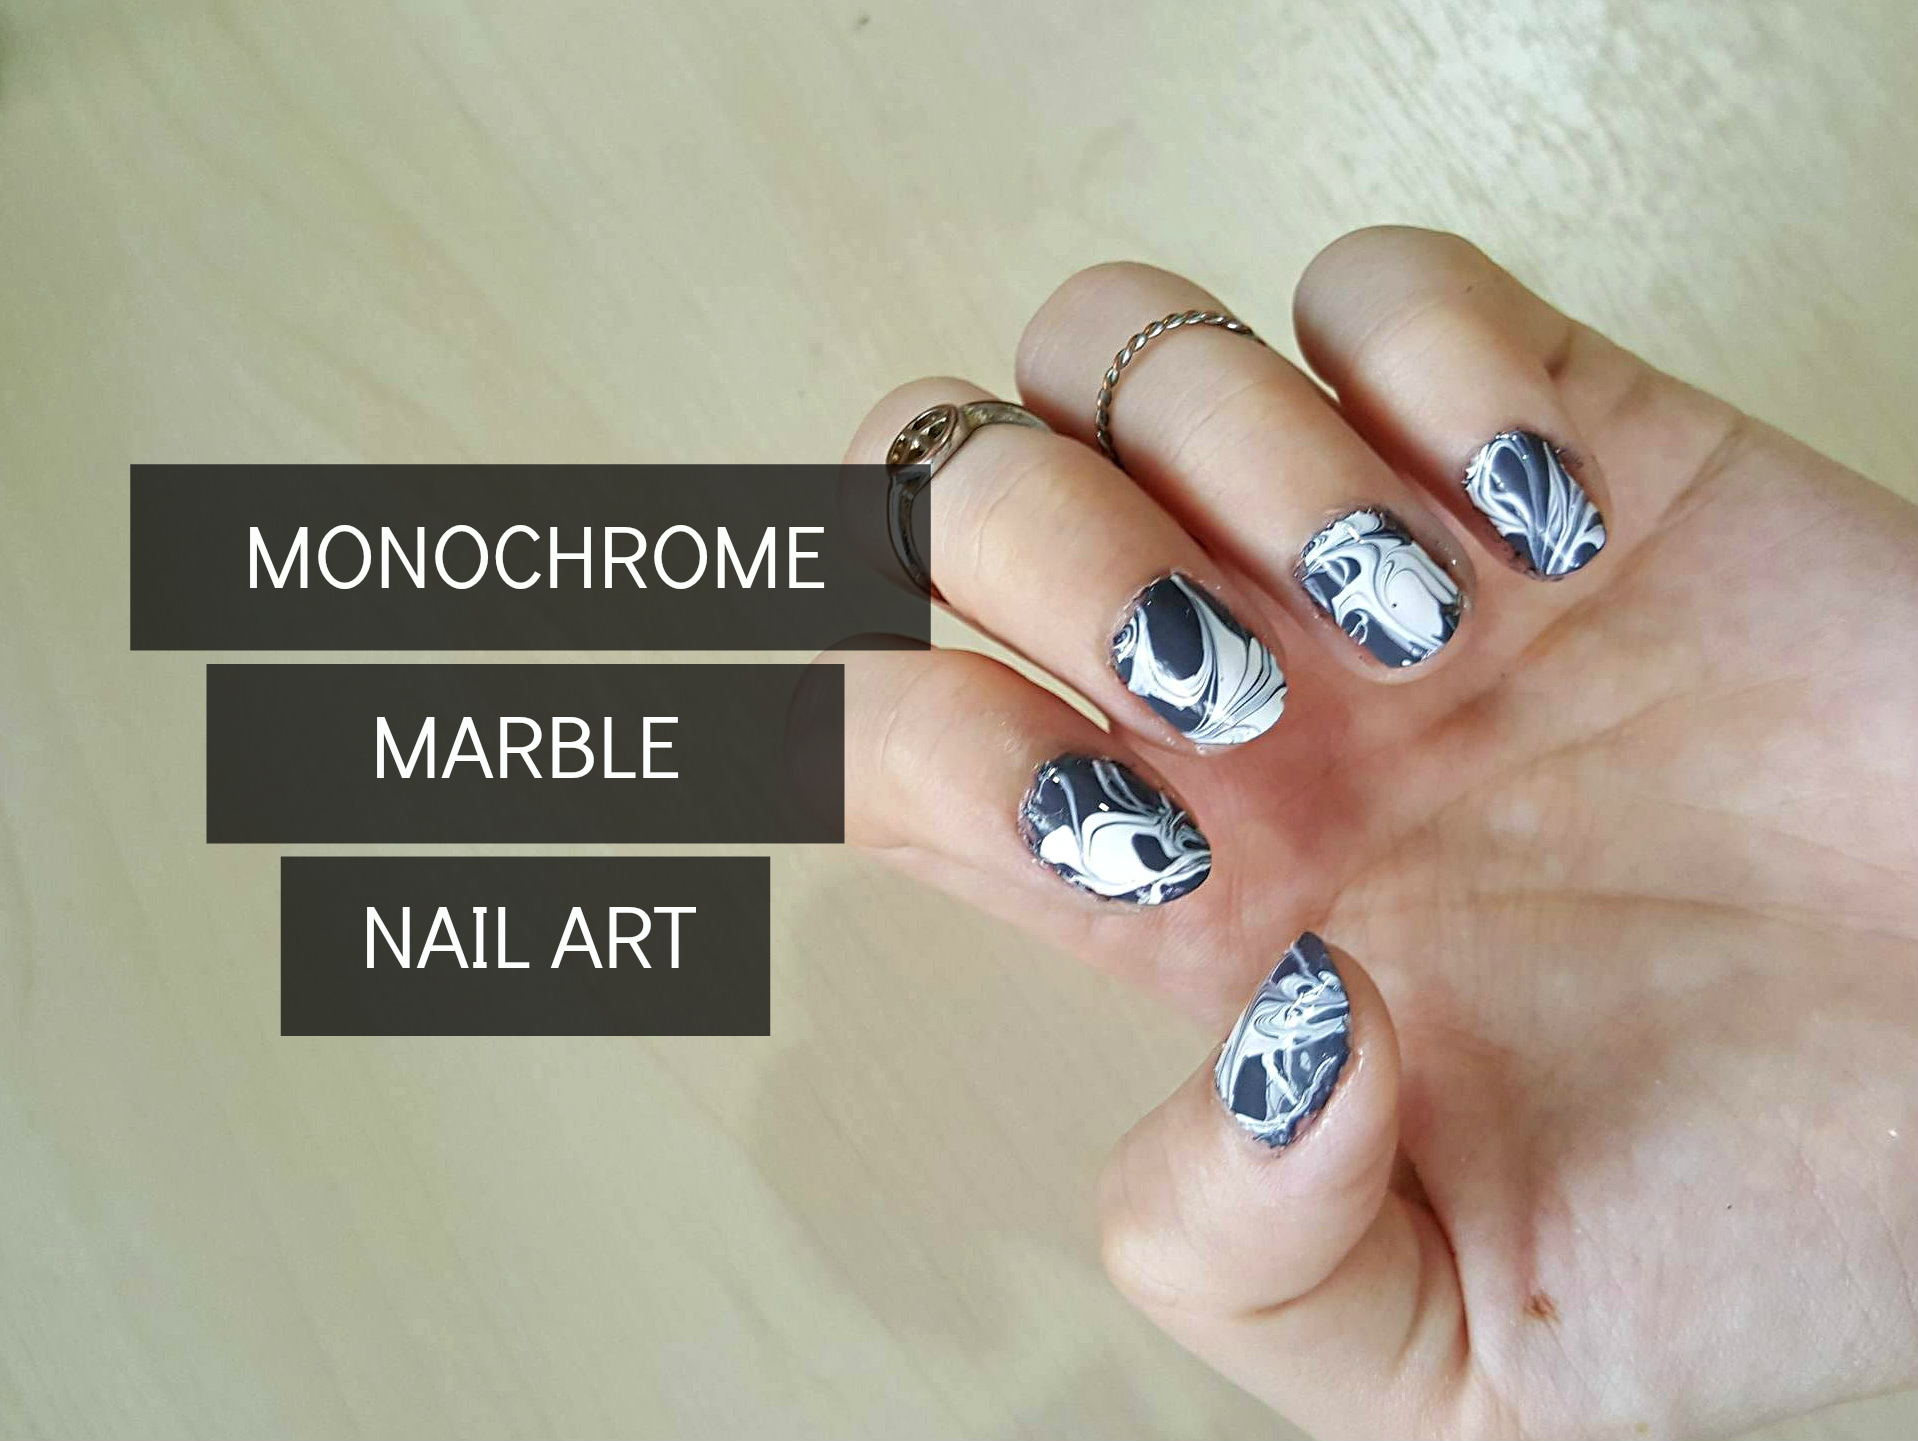 Marble Nail Art DIY on Pinterest - wide 5